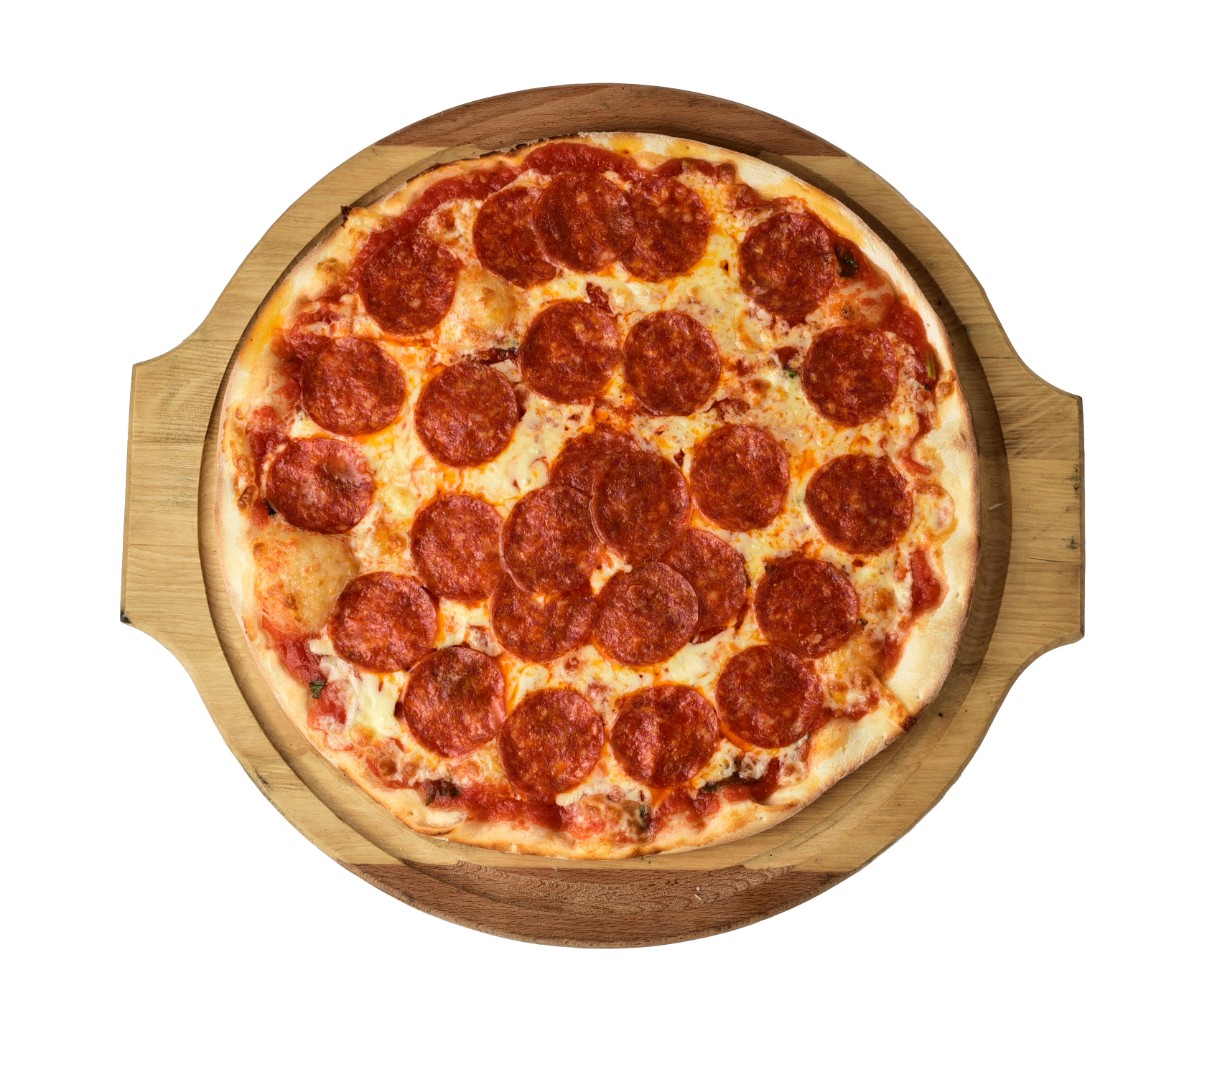 сколько стоит пицца пепперони в москве фото 69